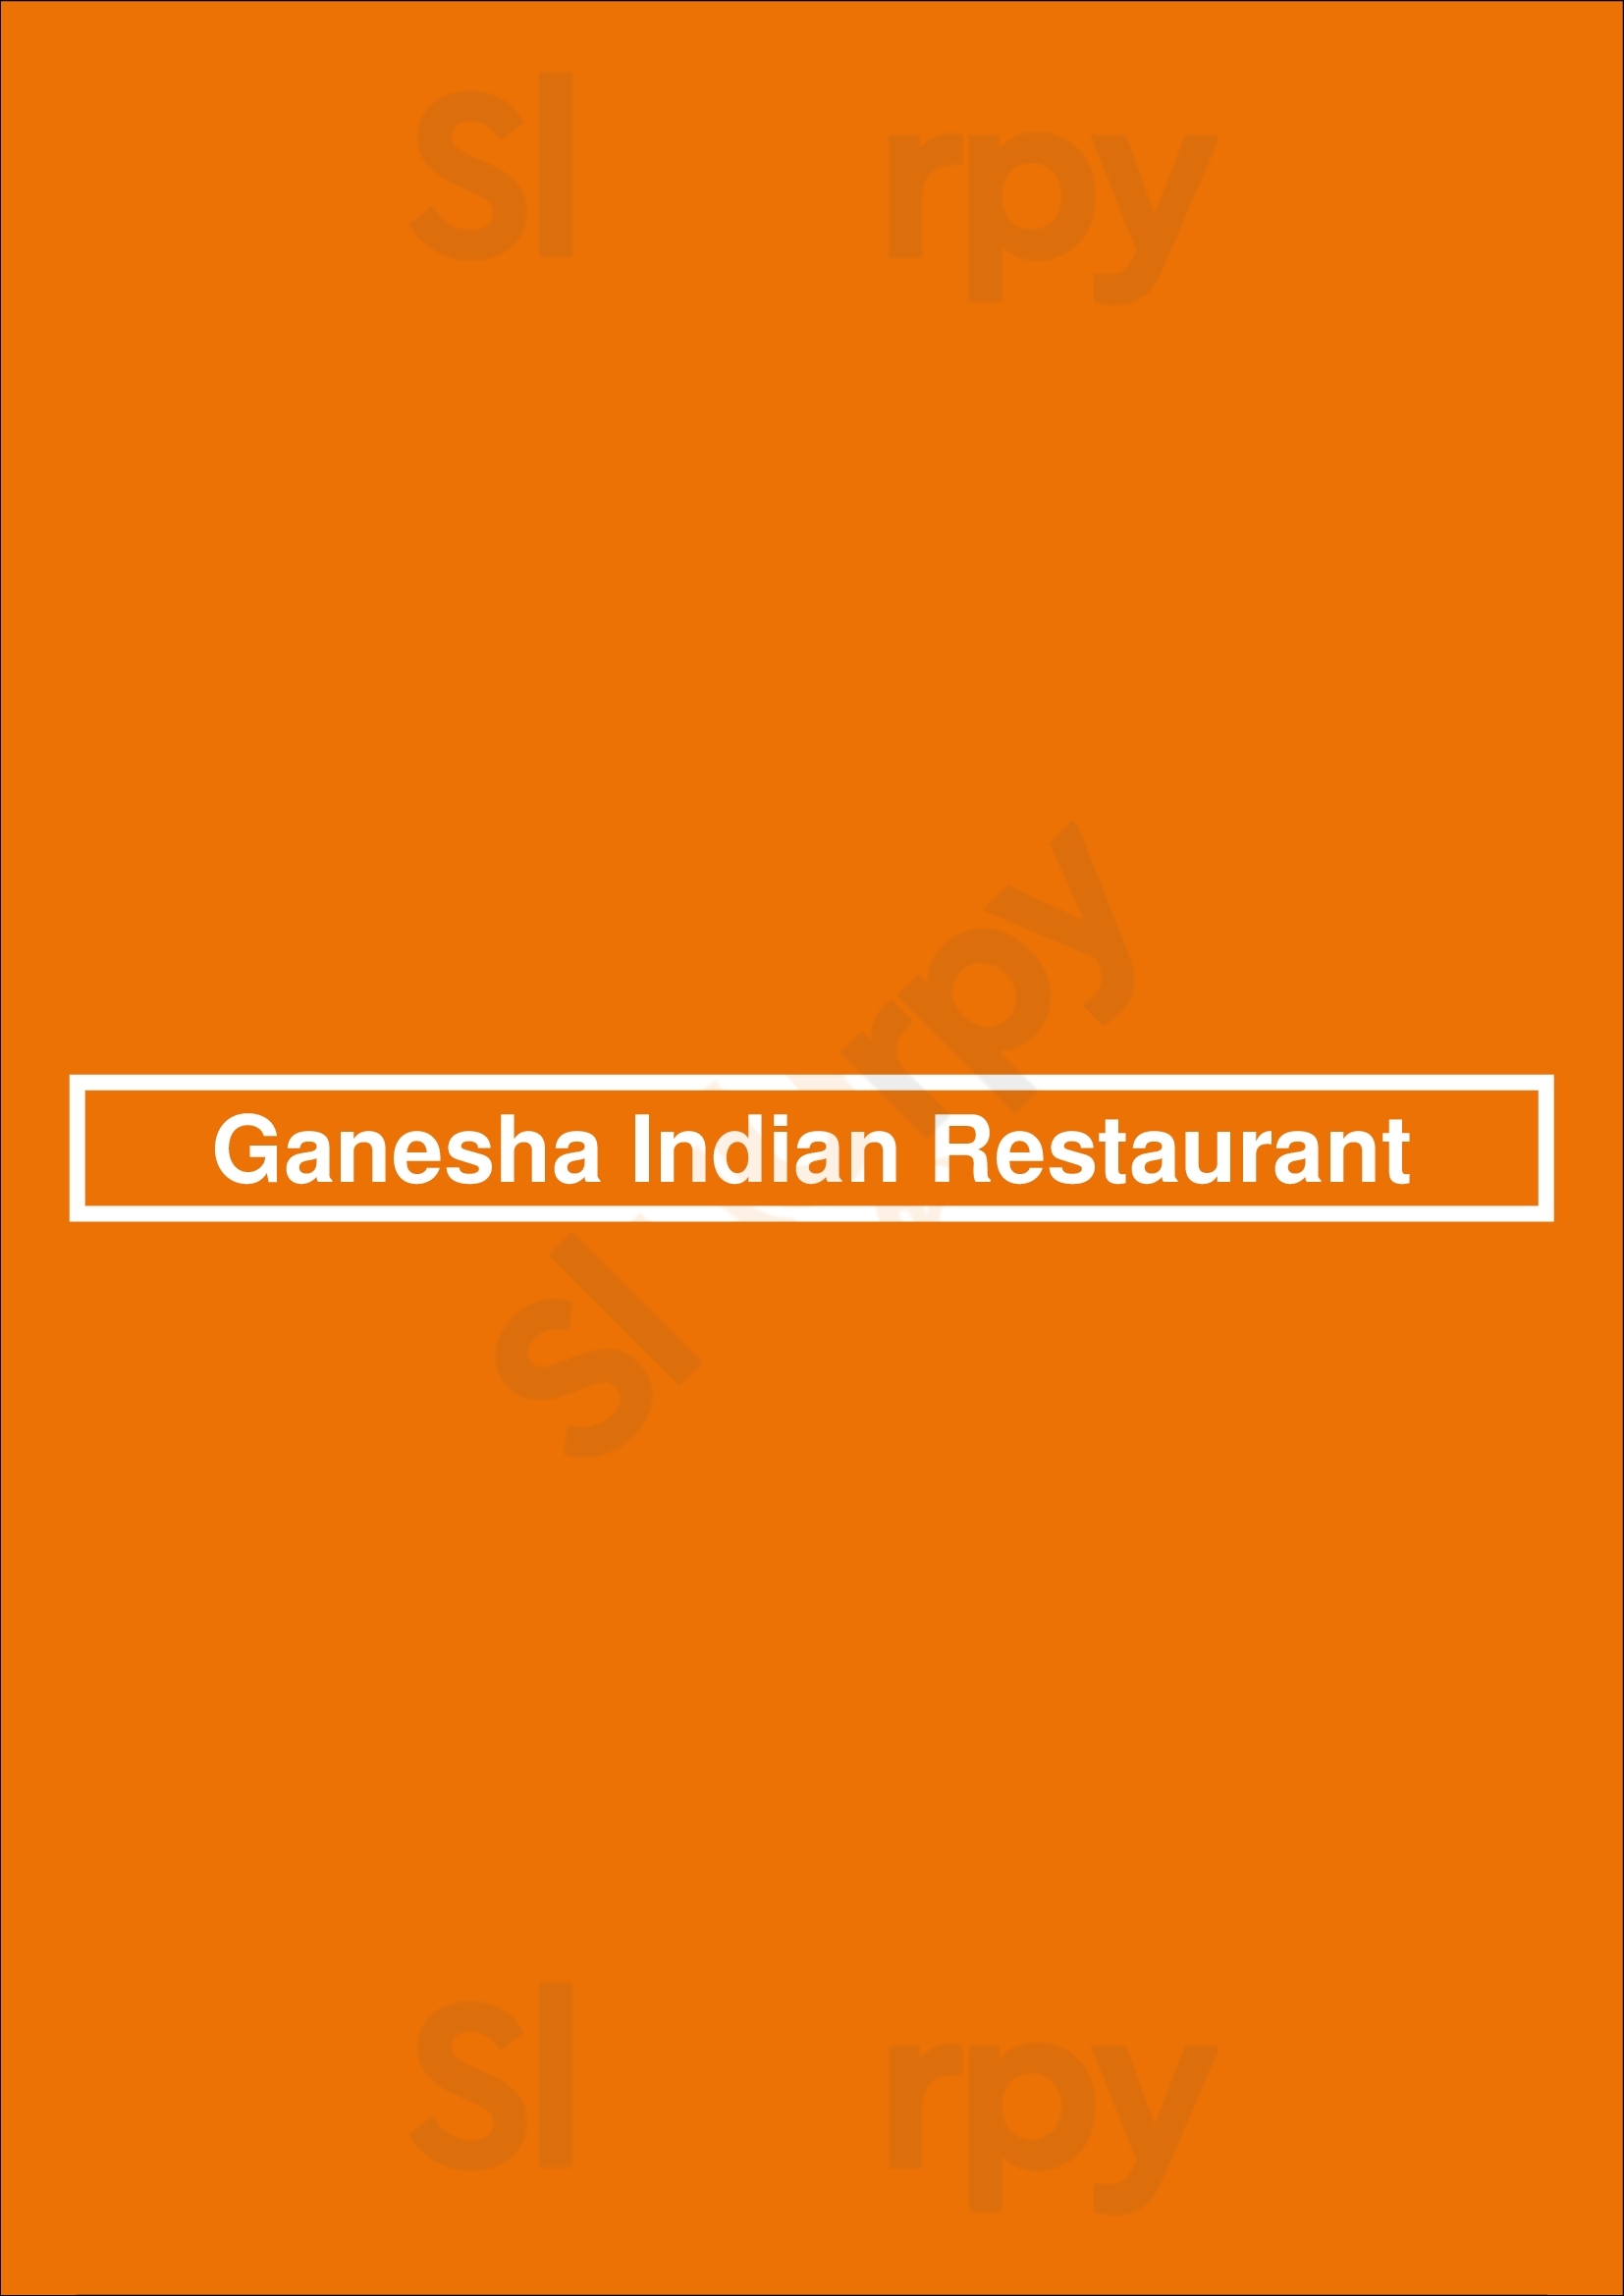 Ganesha Indian Restaurant Hilversum Menu - 1